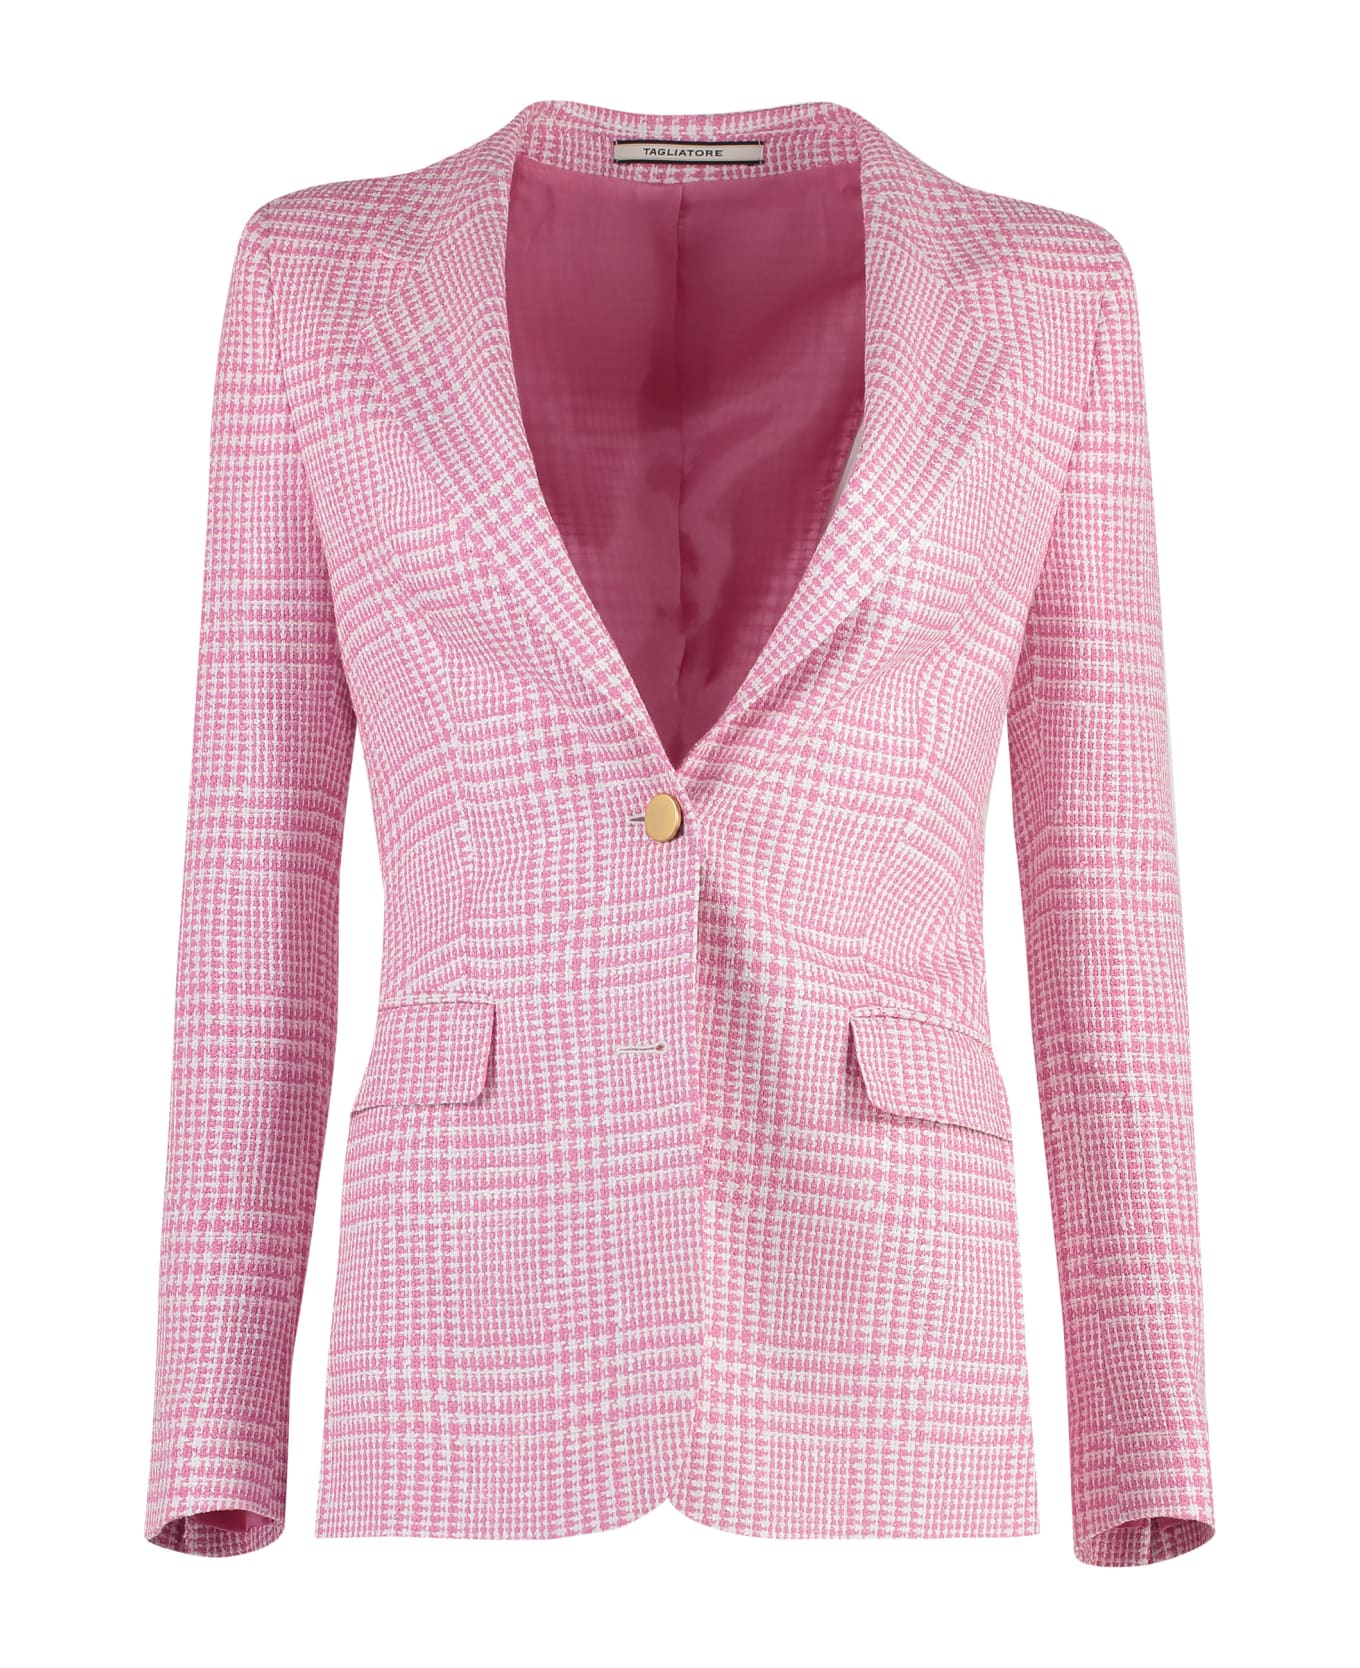 Tagliatore 0205 J-parigi Single-breasted Two-button Jacket - Pink ブレザー